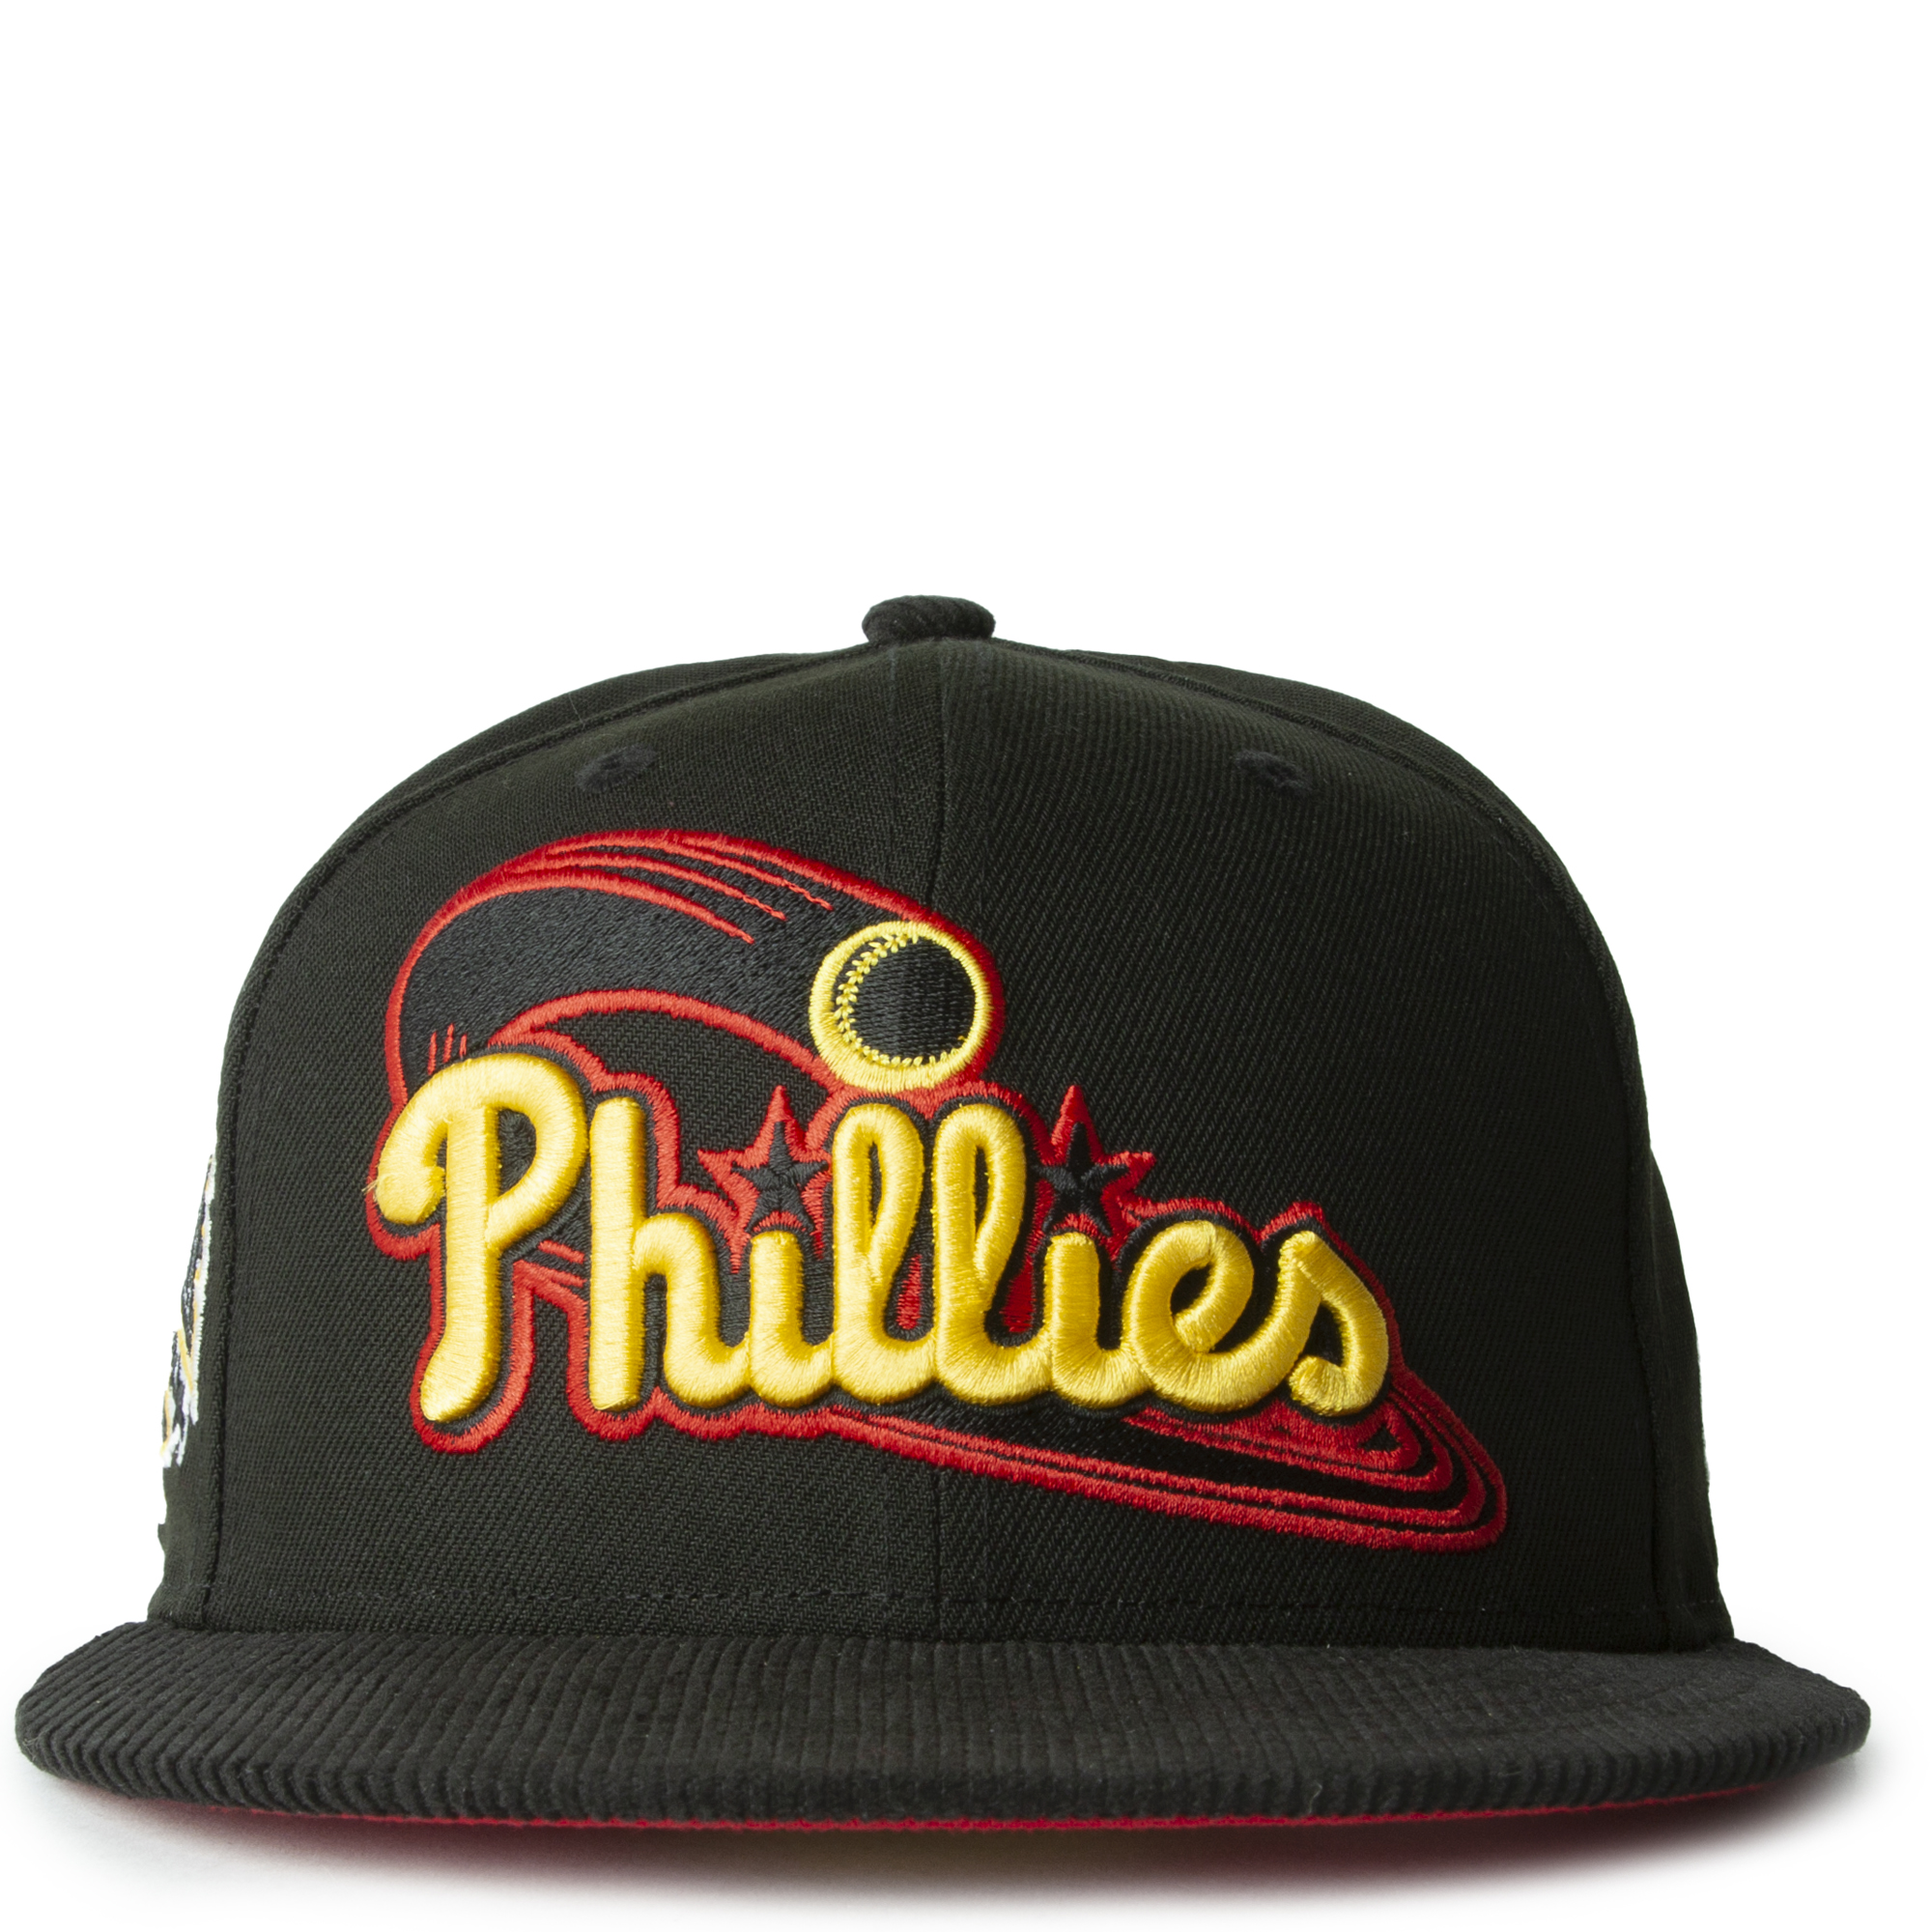 New Era Caps Philadelphia Phillies 59FIFTY Fitted Hat Black